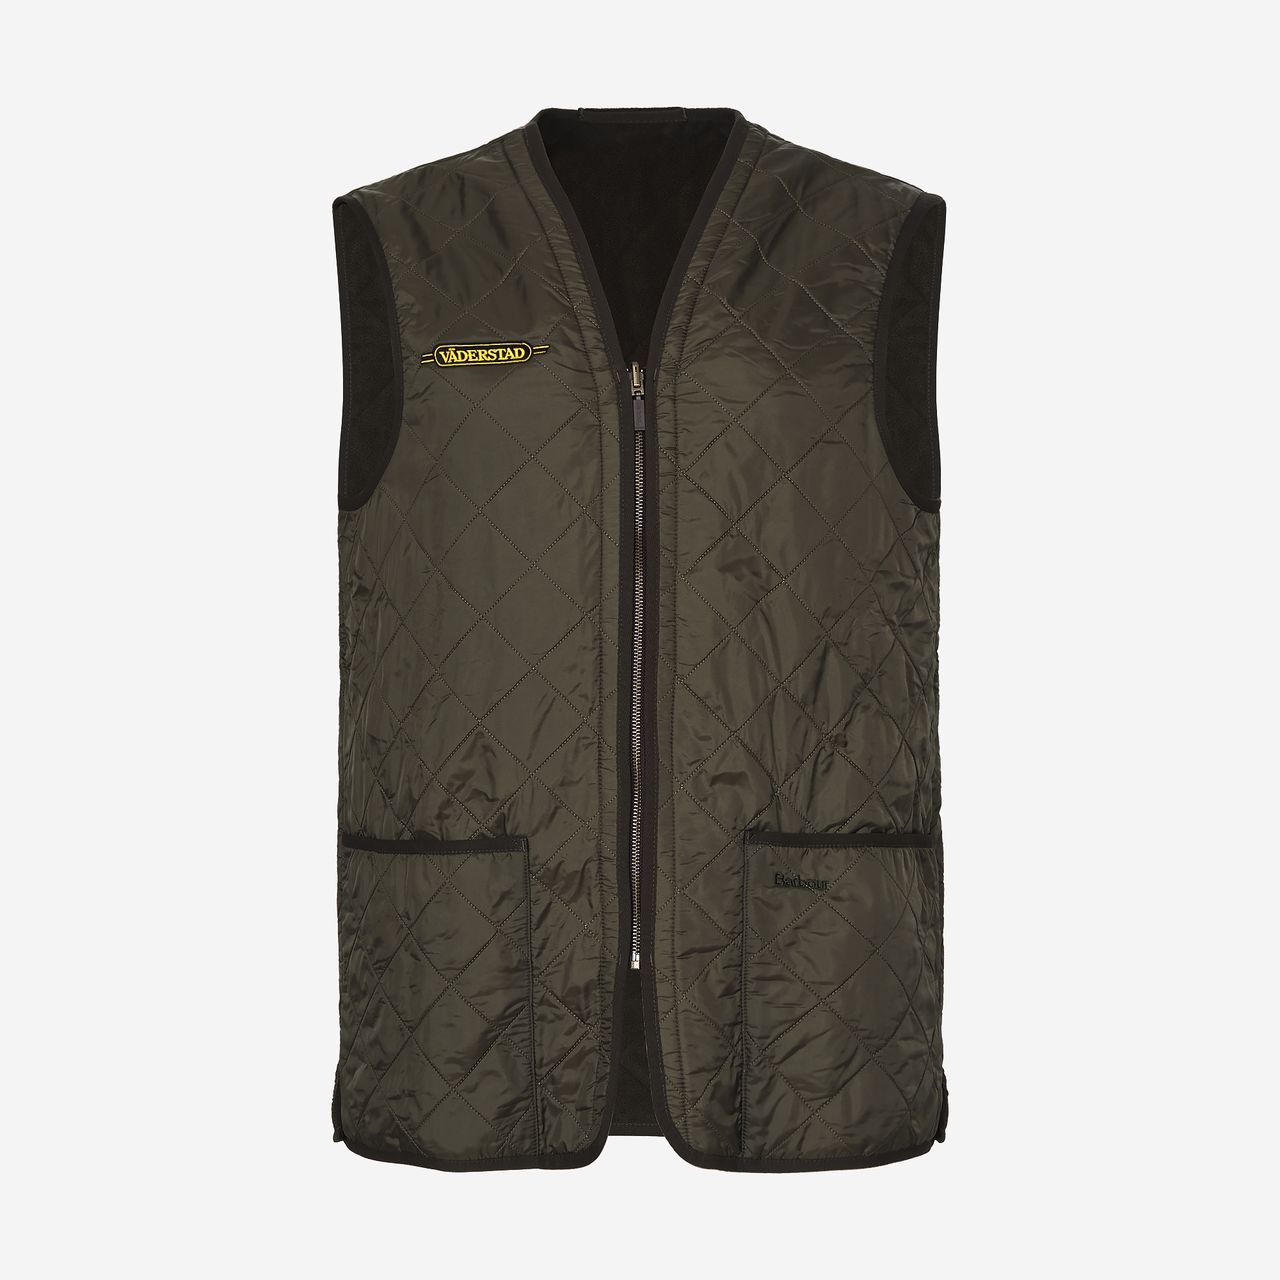 Barbour vest (men's)